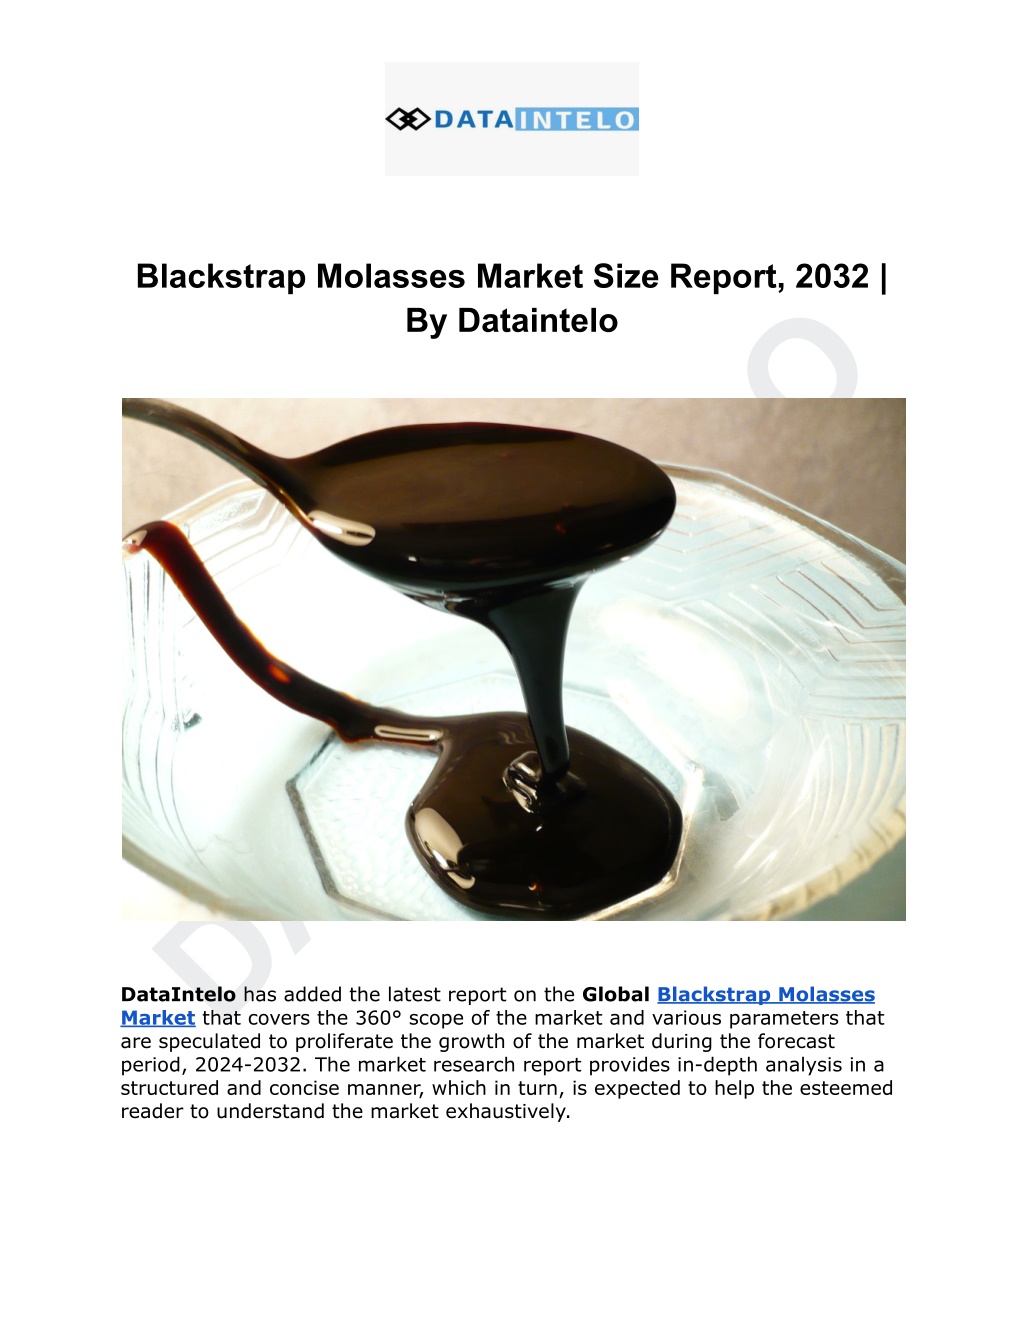 blackstrap molasses market size report 2032 l.w